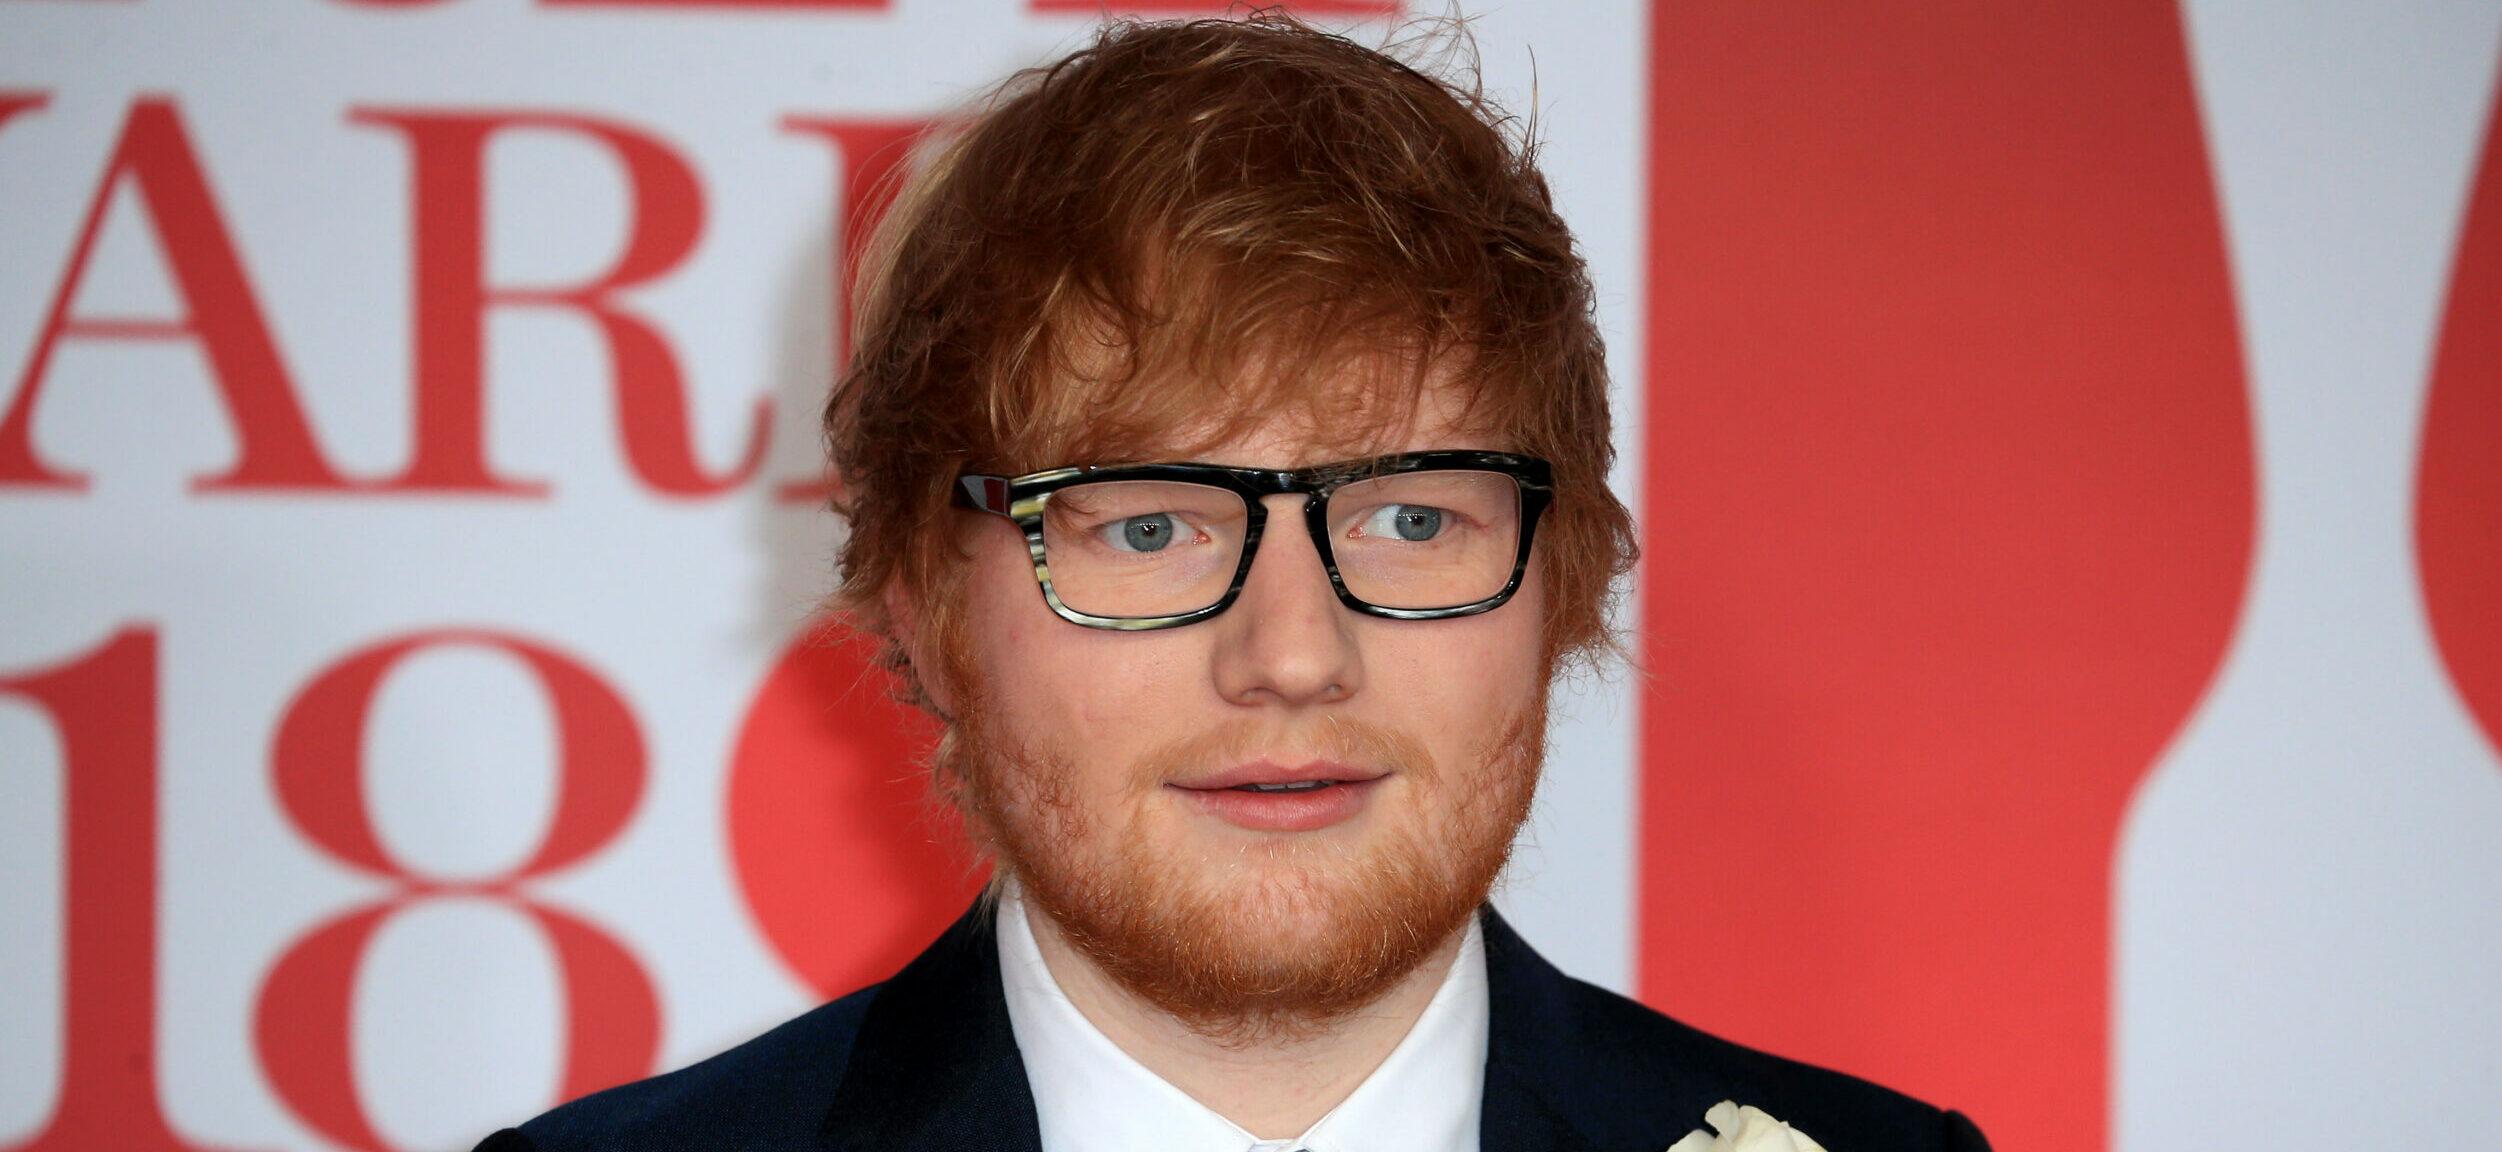 Ed Sheeran Brit Awards at the O2 Arena in London, UK.